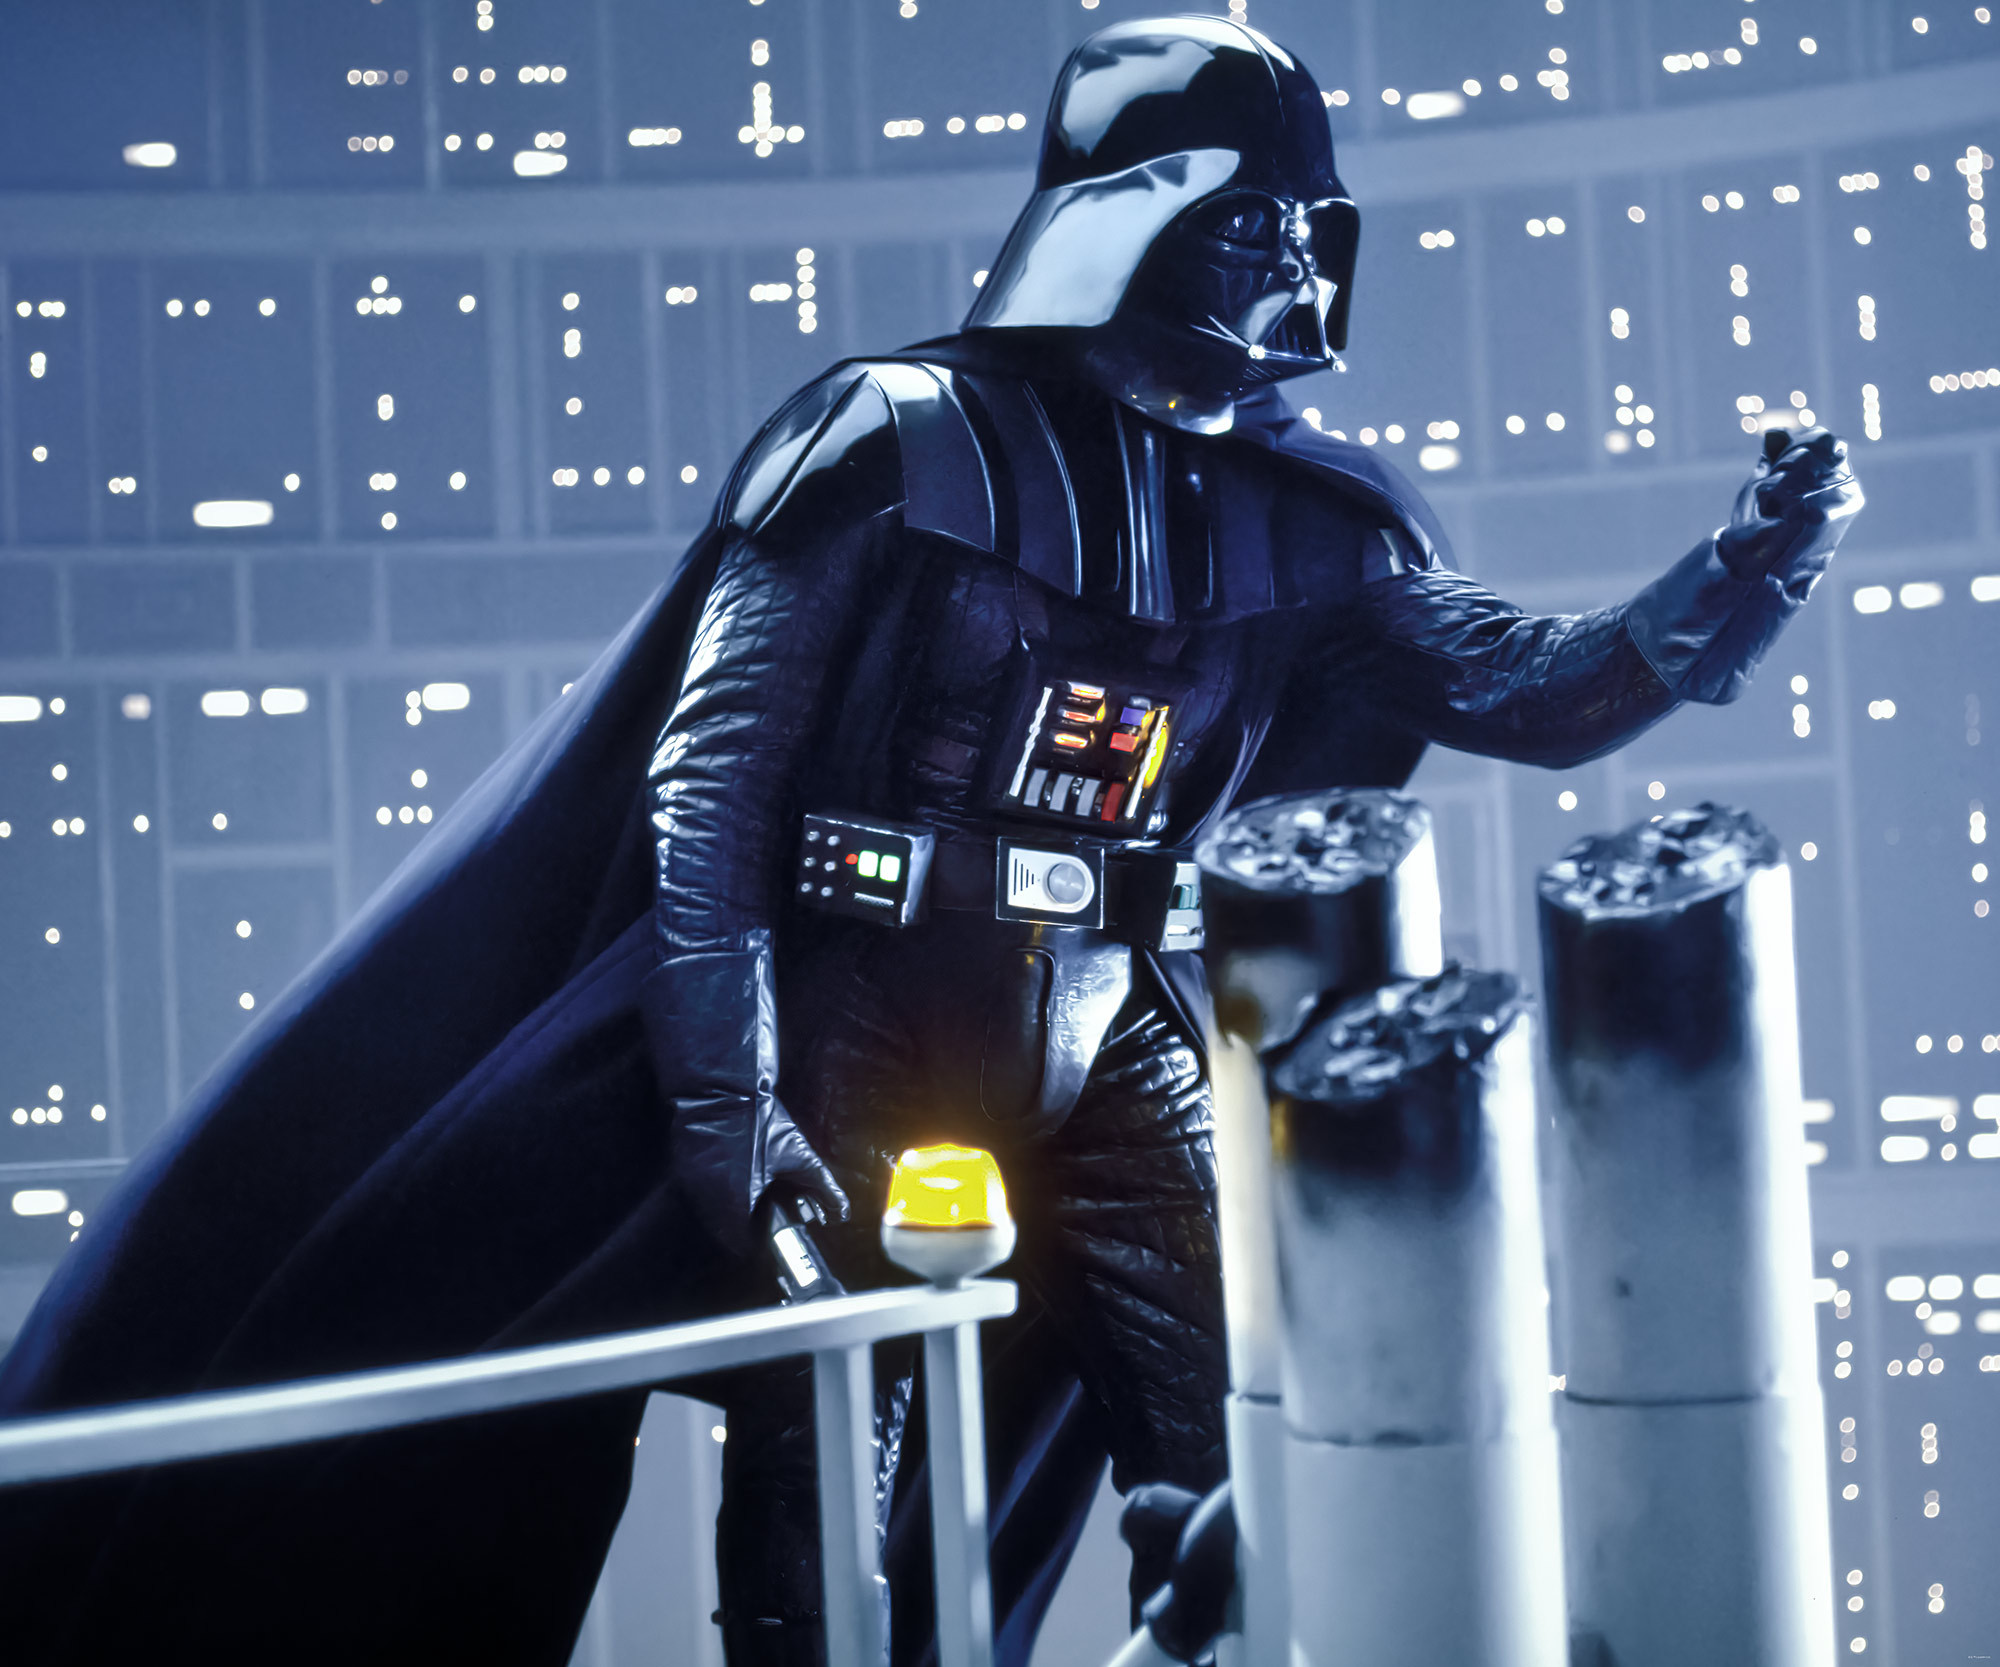 Felpudo Darth Vader Welcome to the Dark Side - Star Wars - Quelovendan